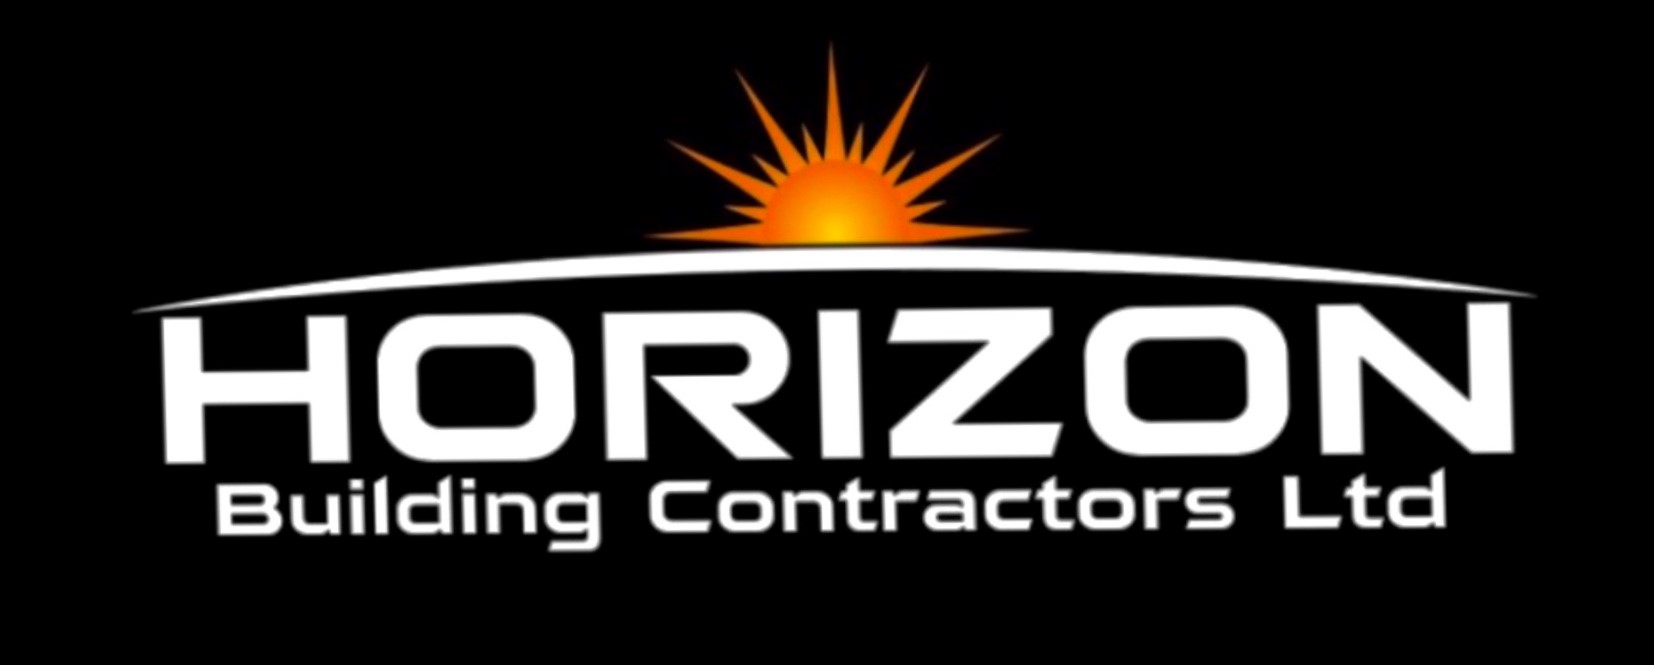 Horizon Building Contractors Construction Site Safety Inspection  - 2021